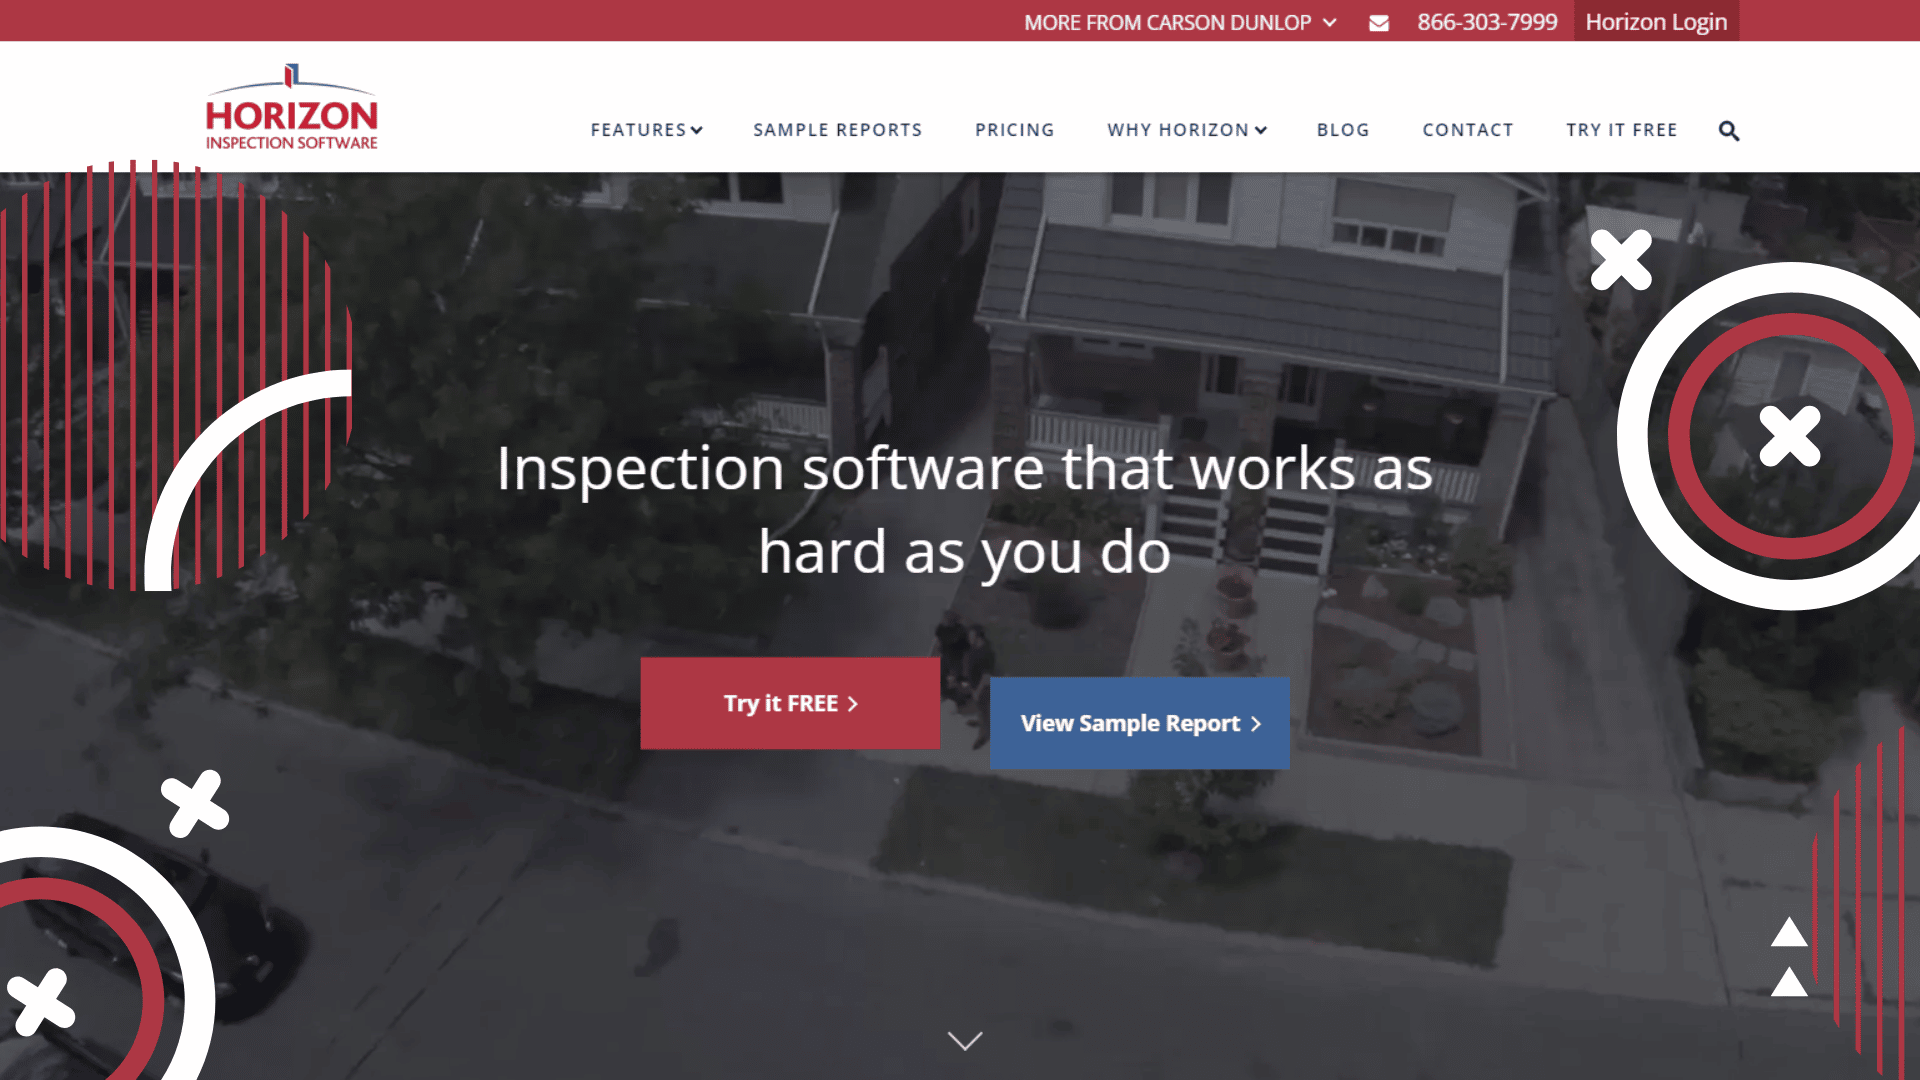 Horizon Inspection Software Features